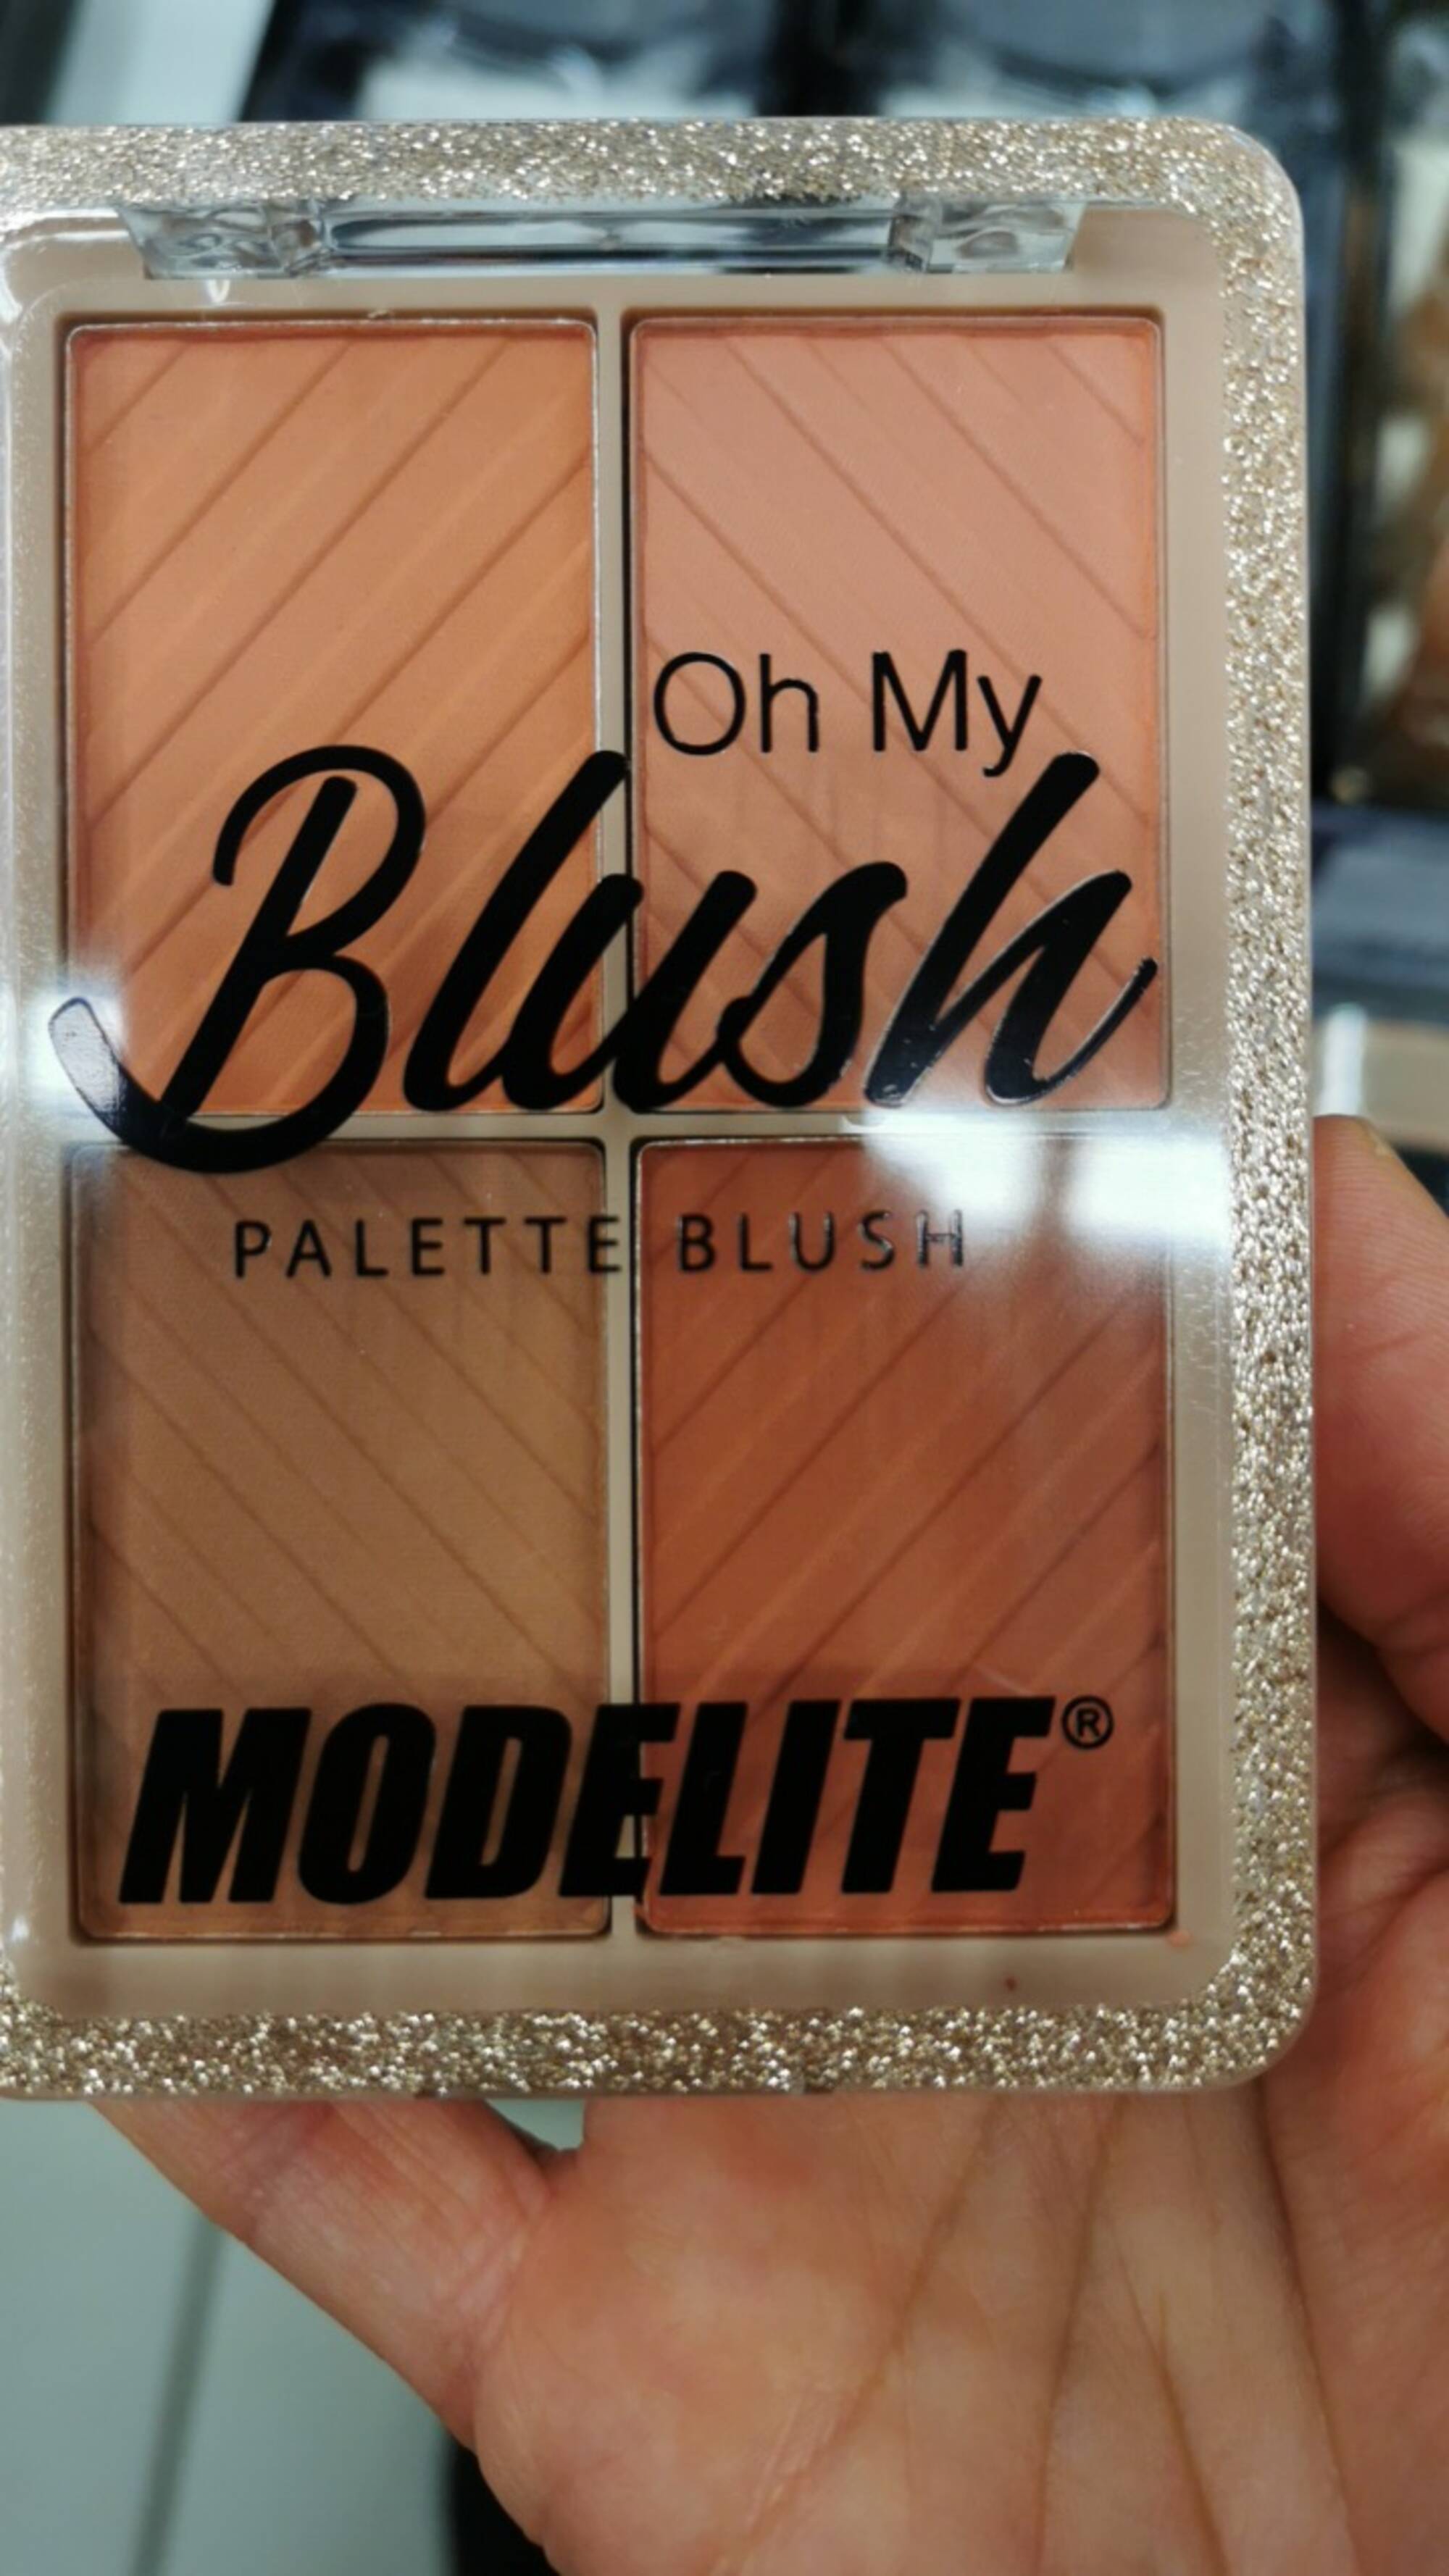 MODÉLITE - Oh my blush - Palette blush